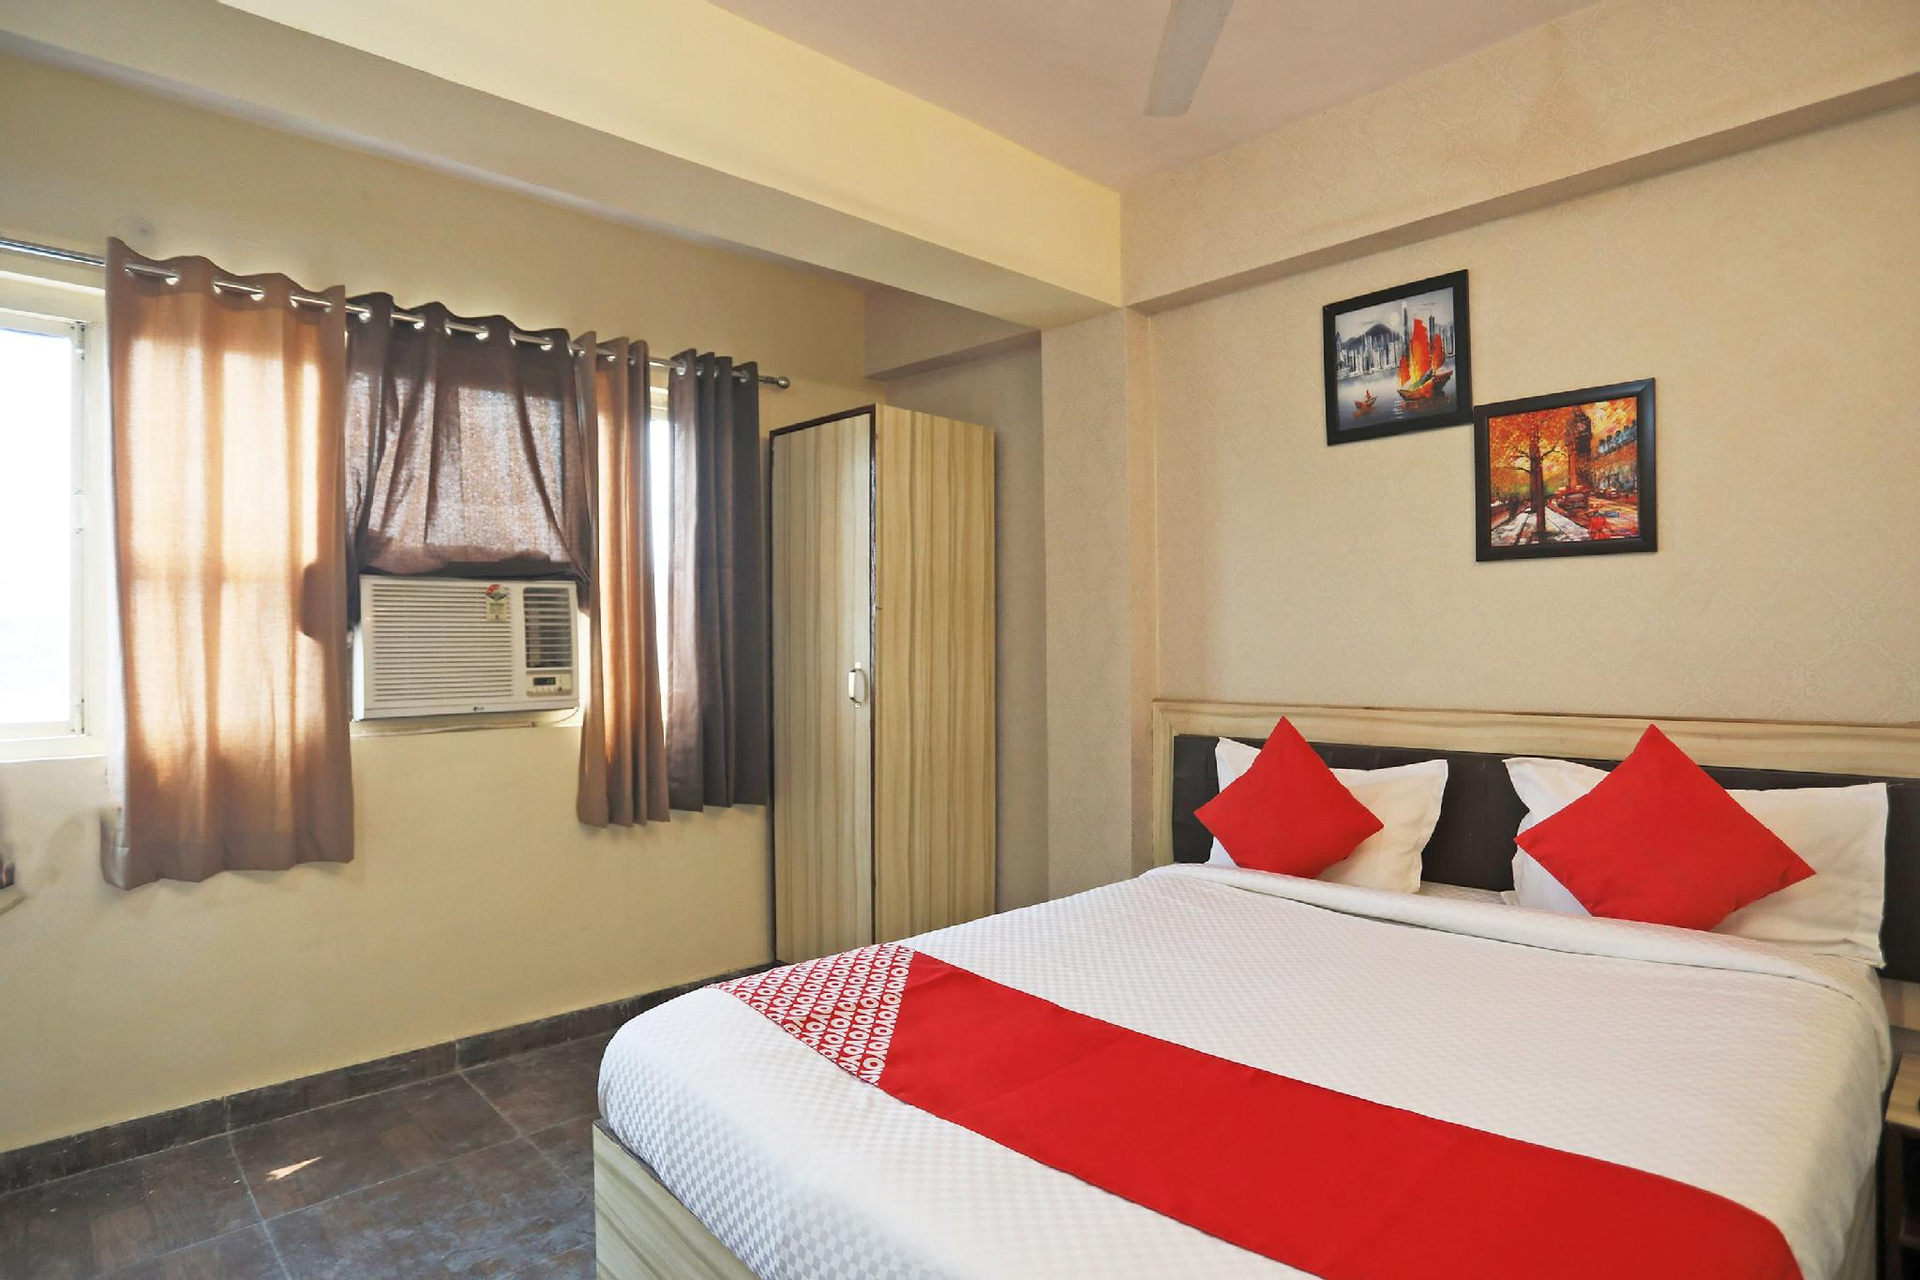 Flagship Hotel Welcome Inn, Faridabad